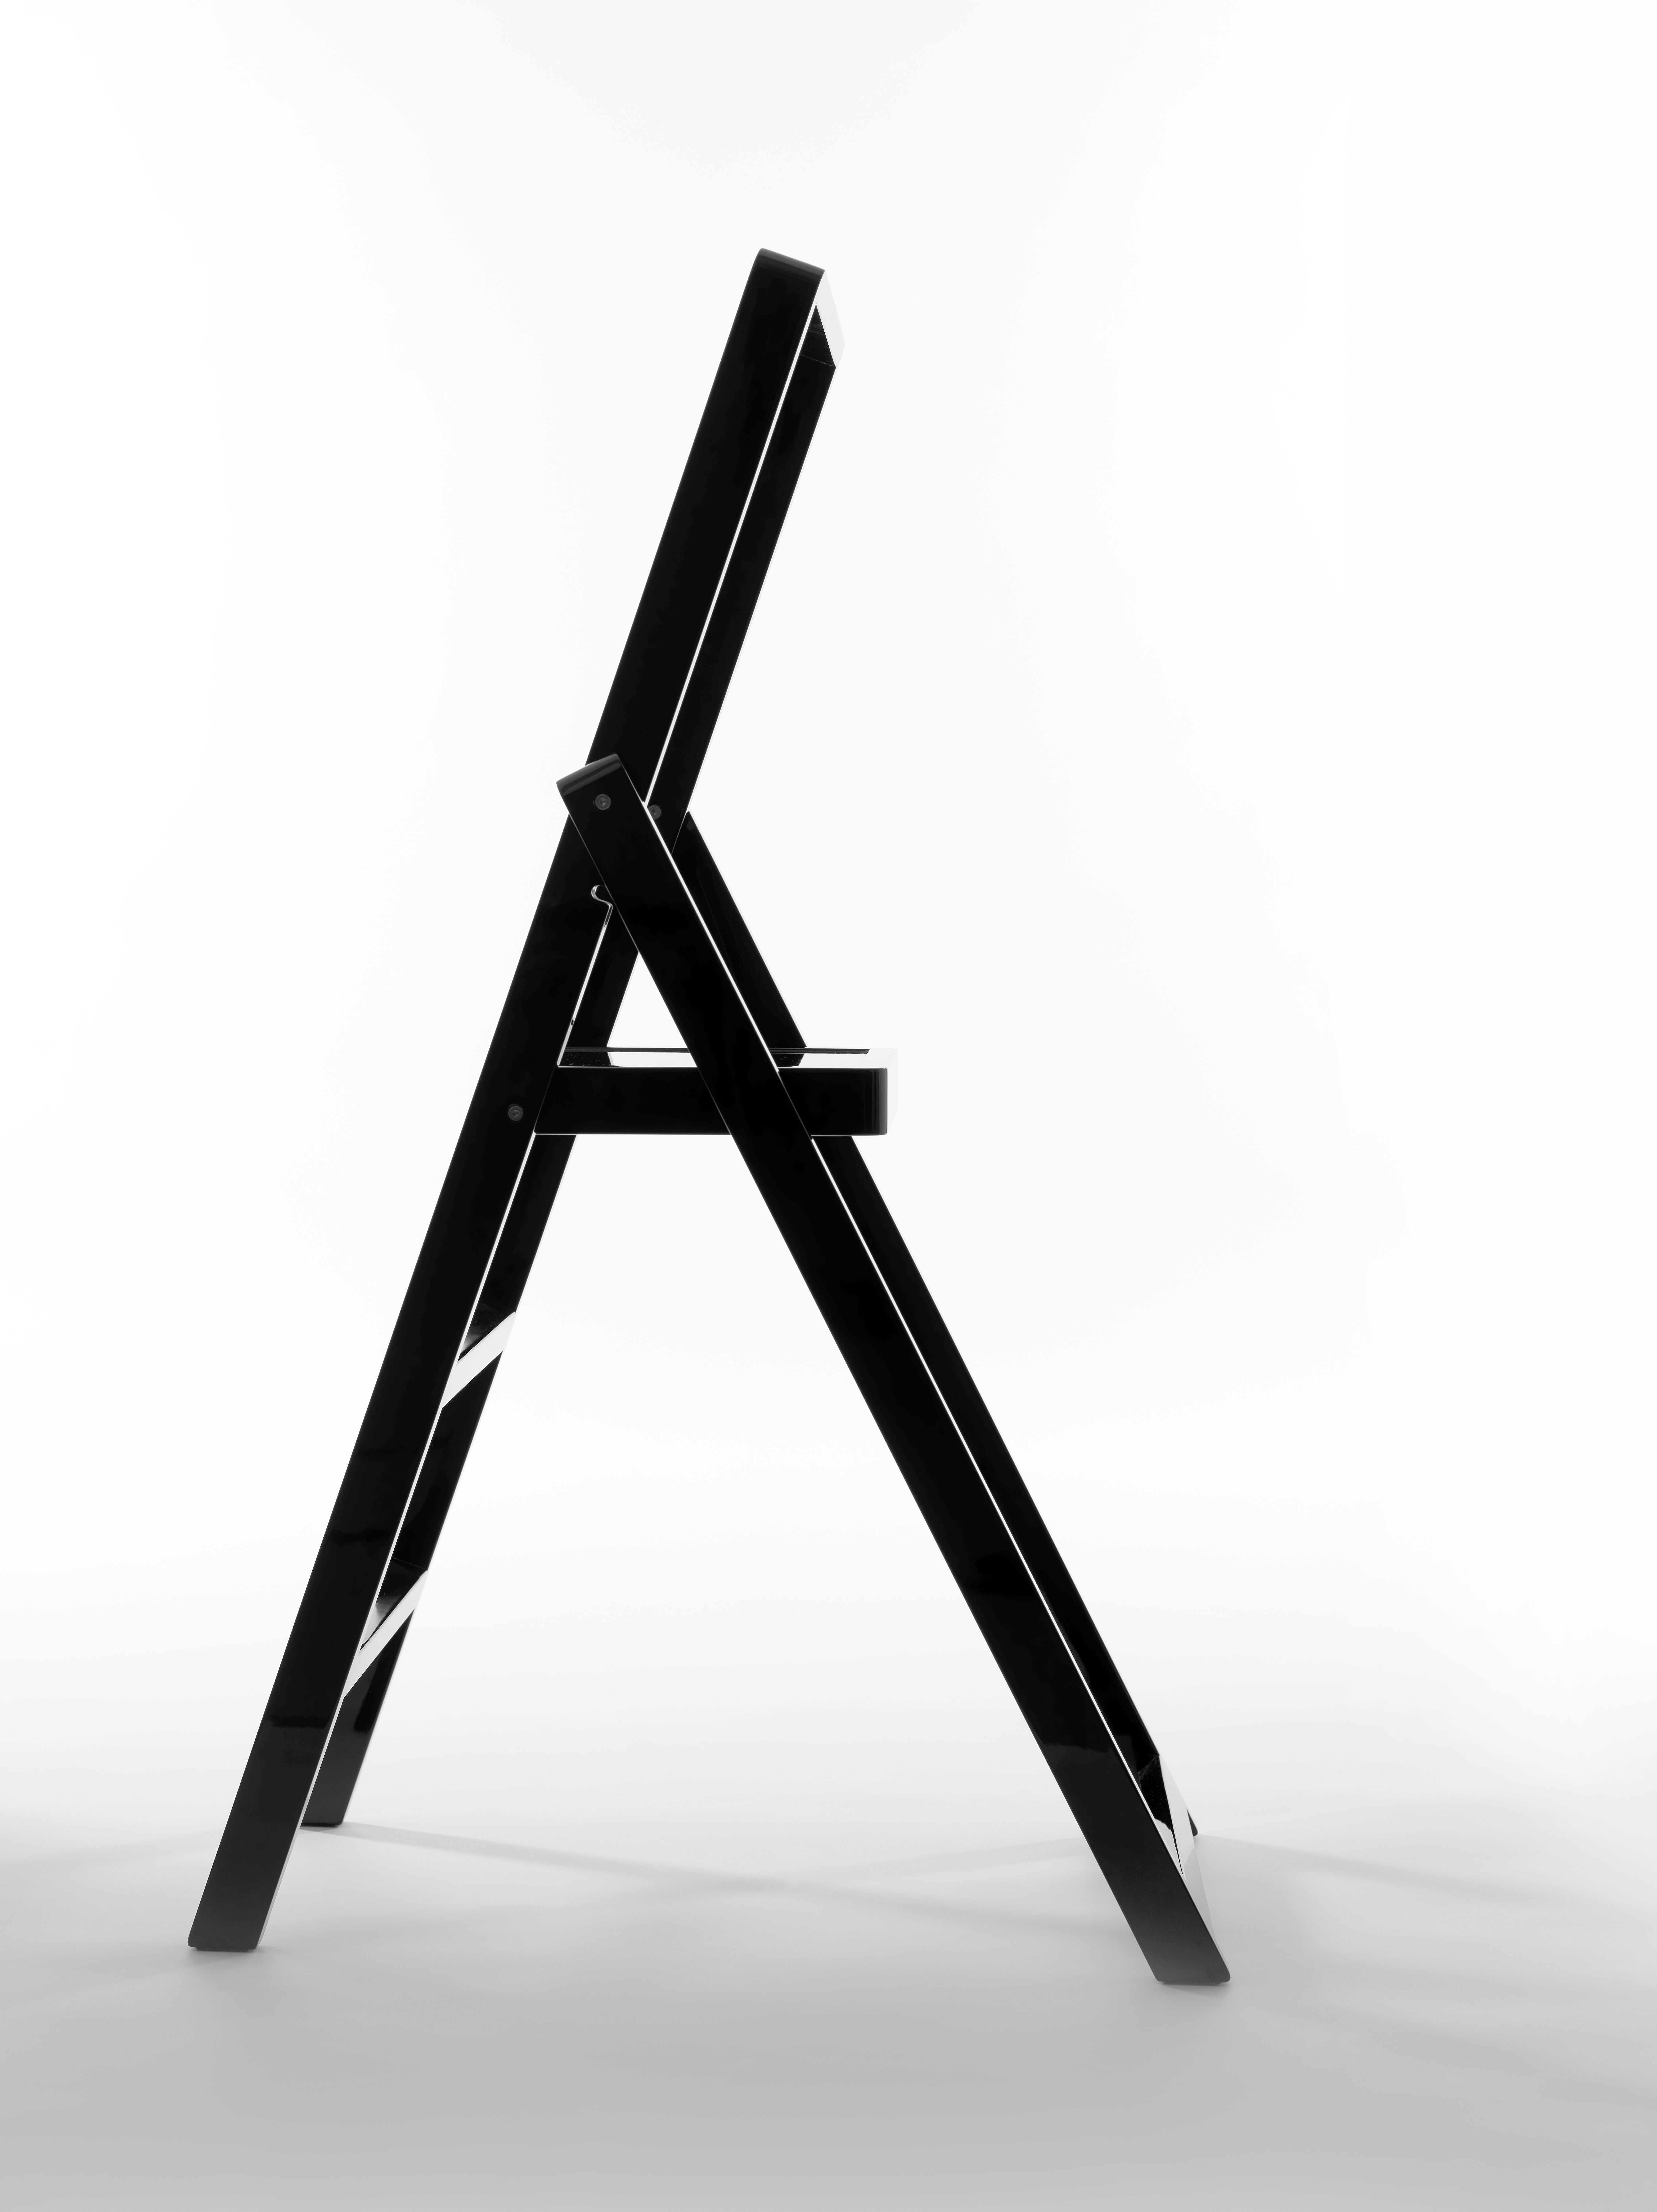 BLACK STEP STEPLADDER PROFILE BY KARL MALMVALL | Furniture/product ...